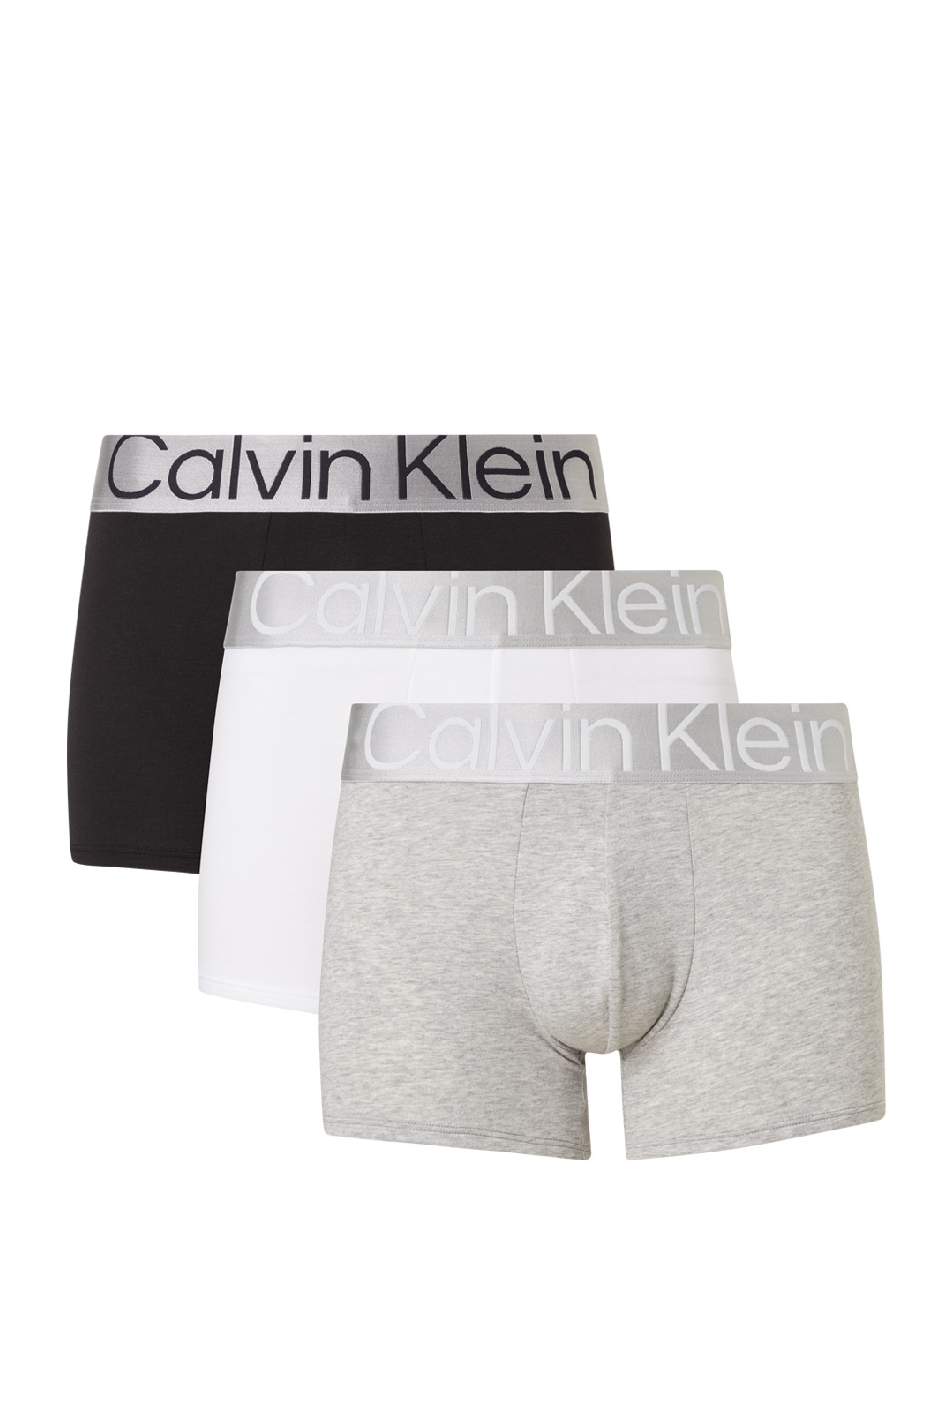 Calvin Klein Men's Trunk 3 Pack